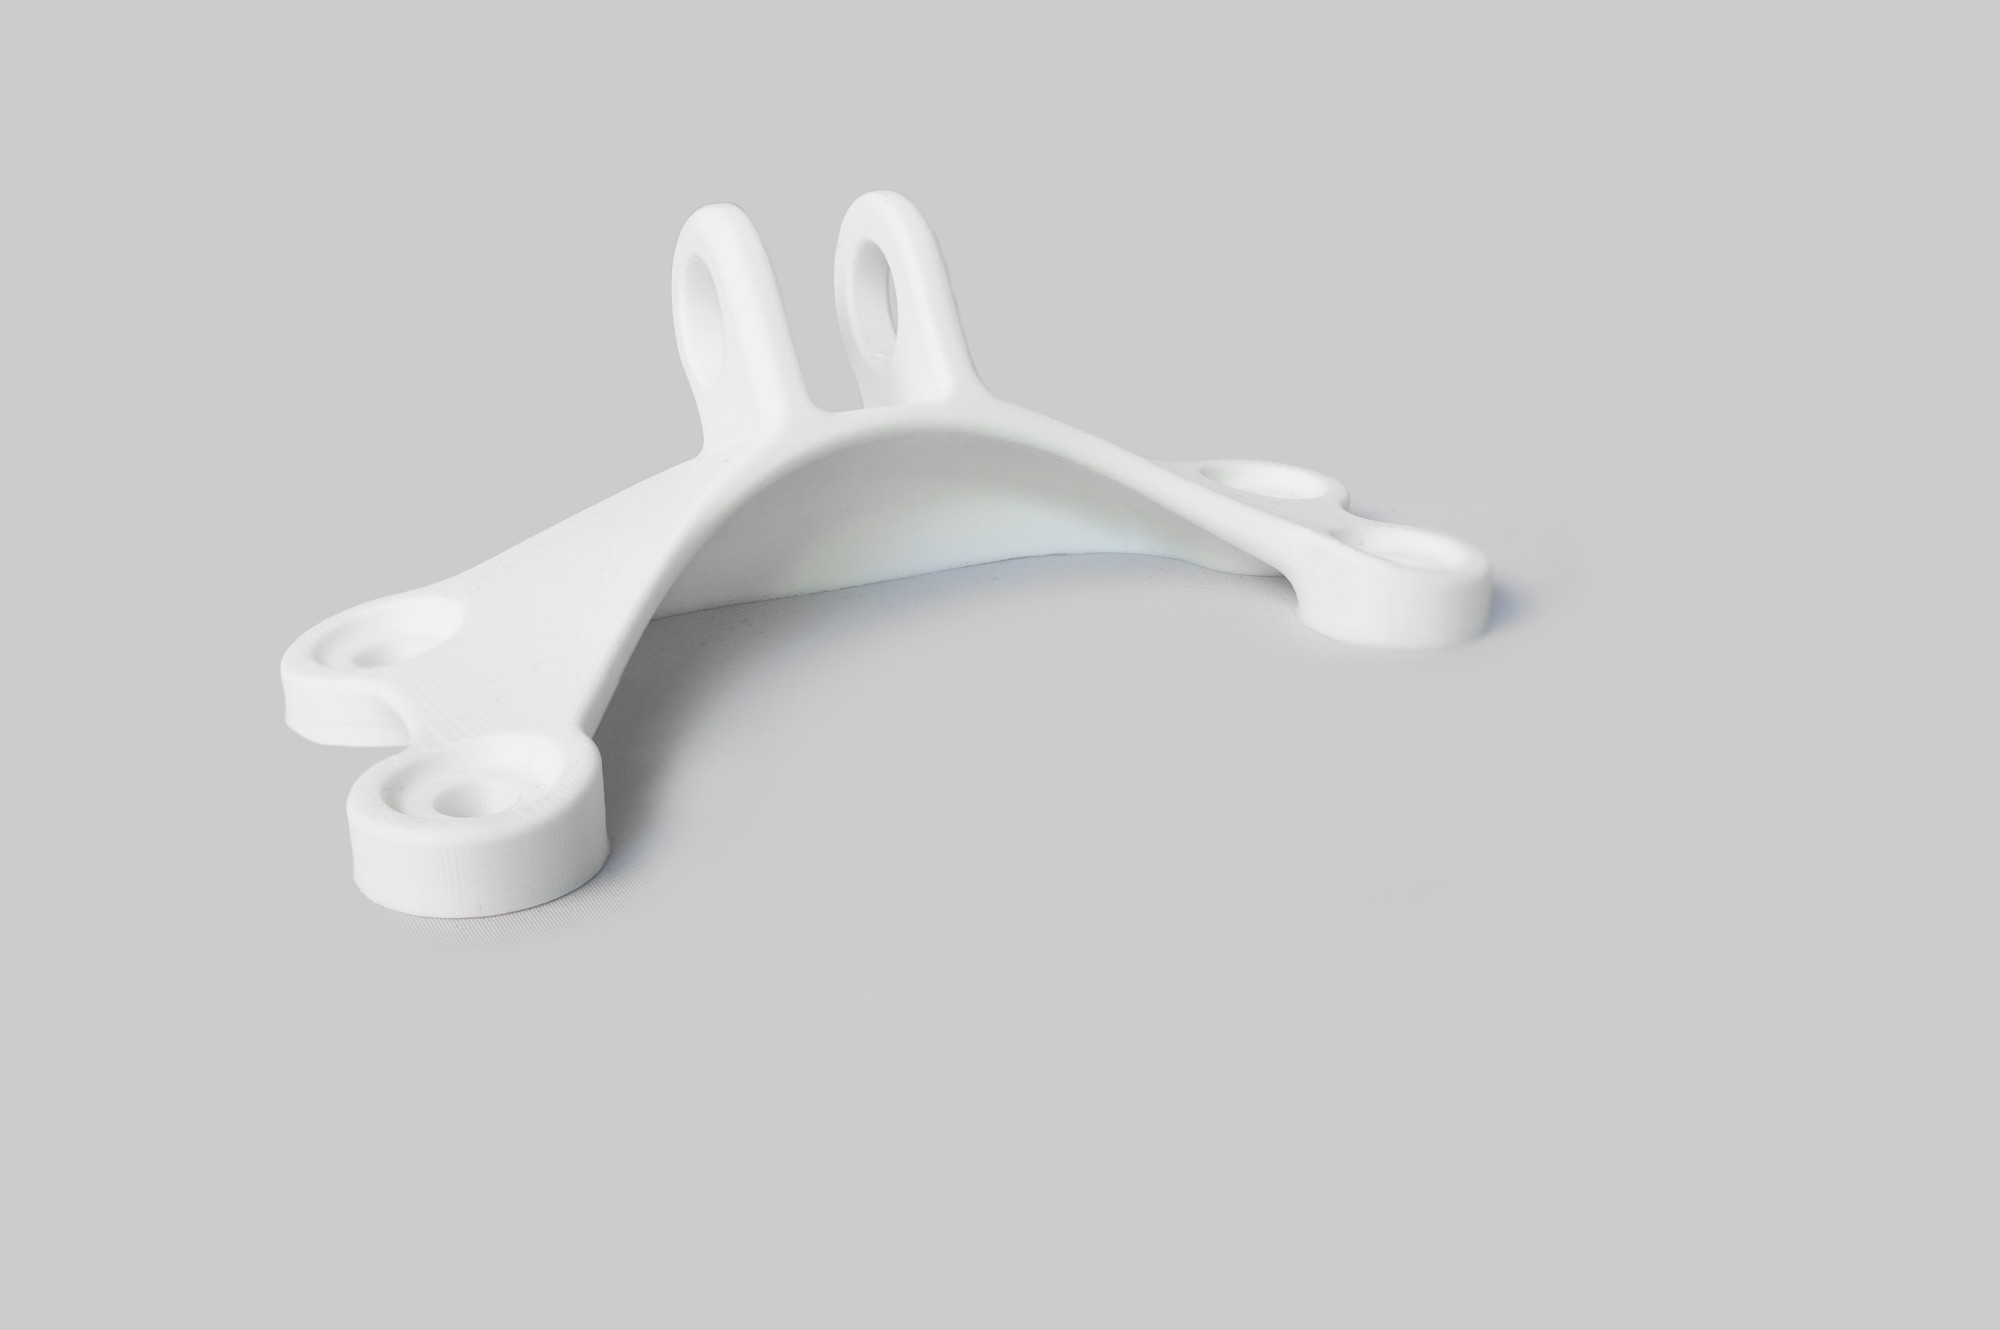 Topology Optimised 3D printed Bracket side